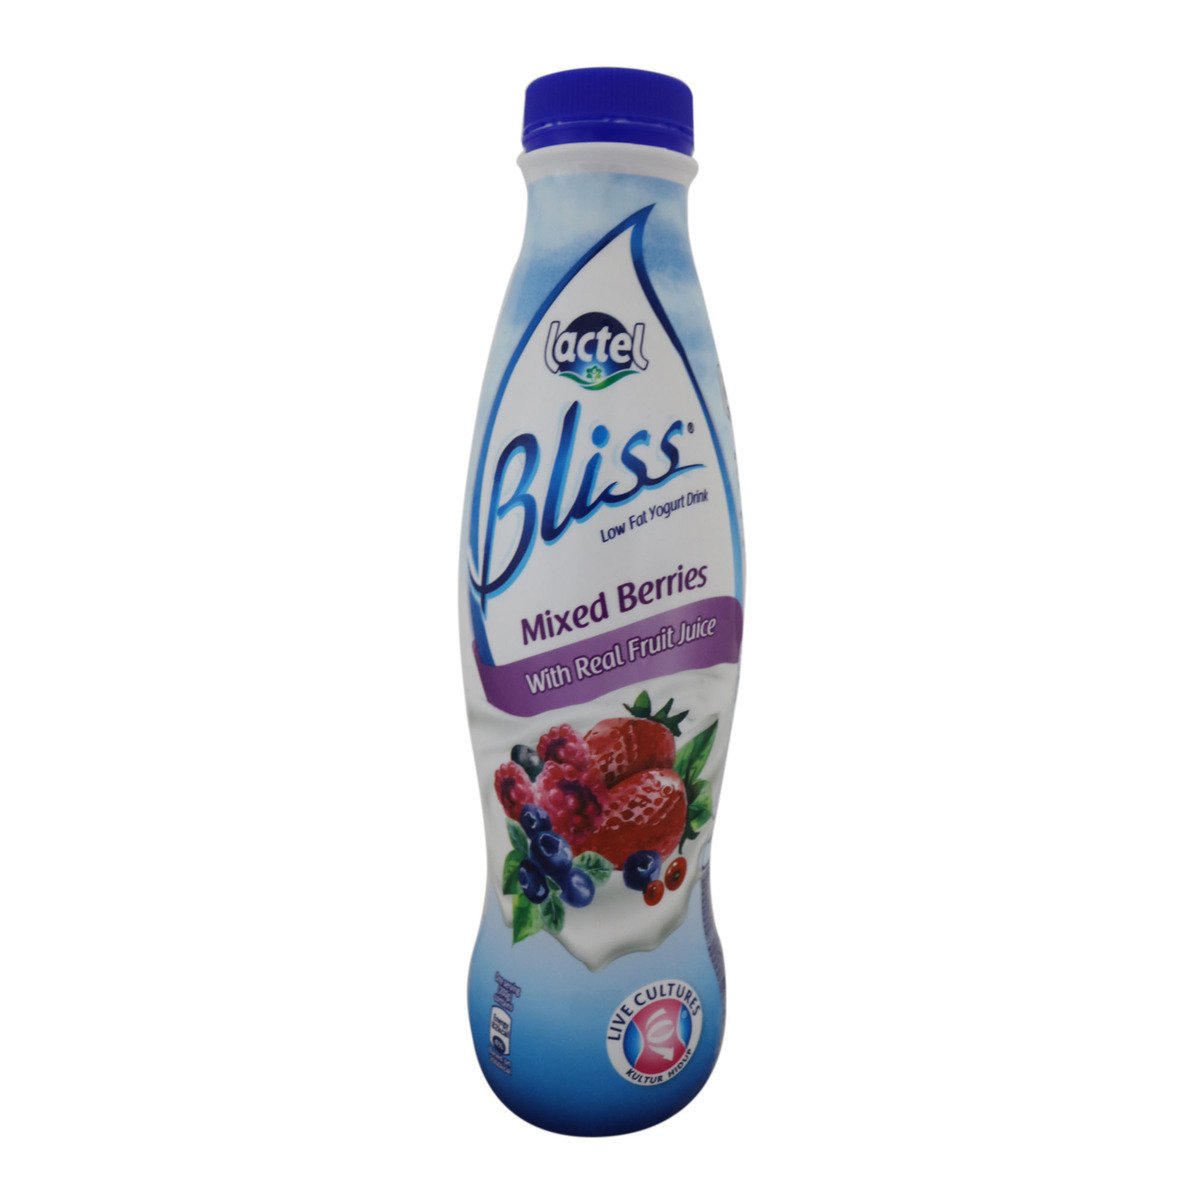 Nestle Lactel Bliss Yoghurt Drink Mixed Berries 700g